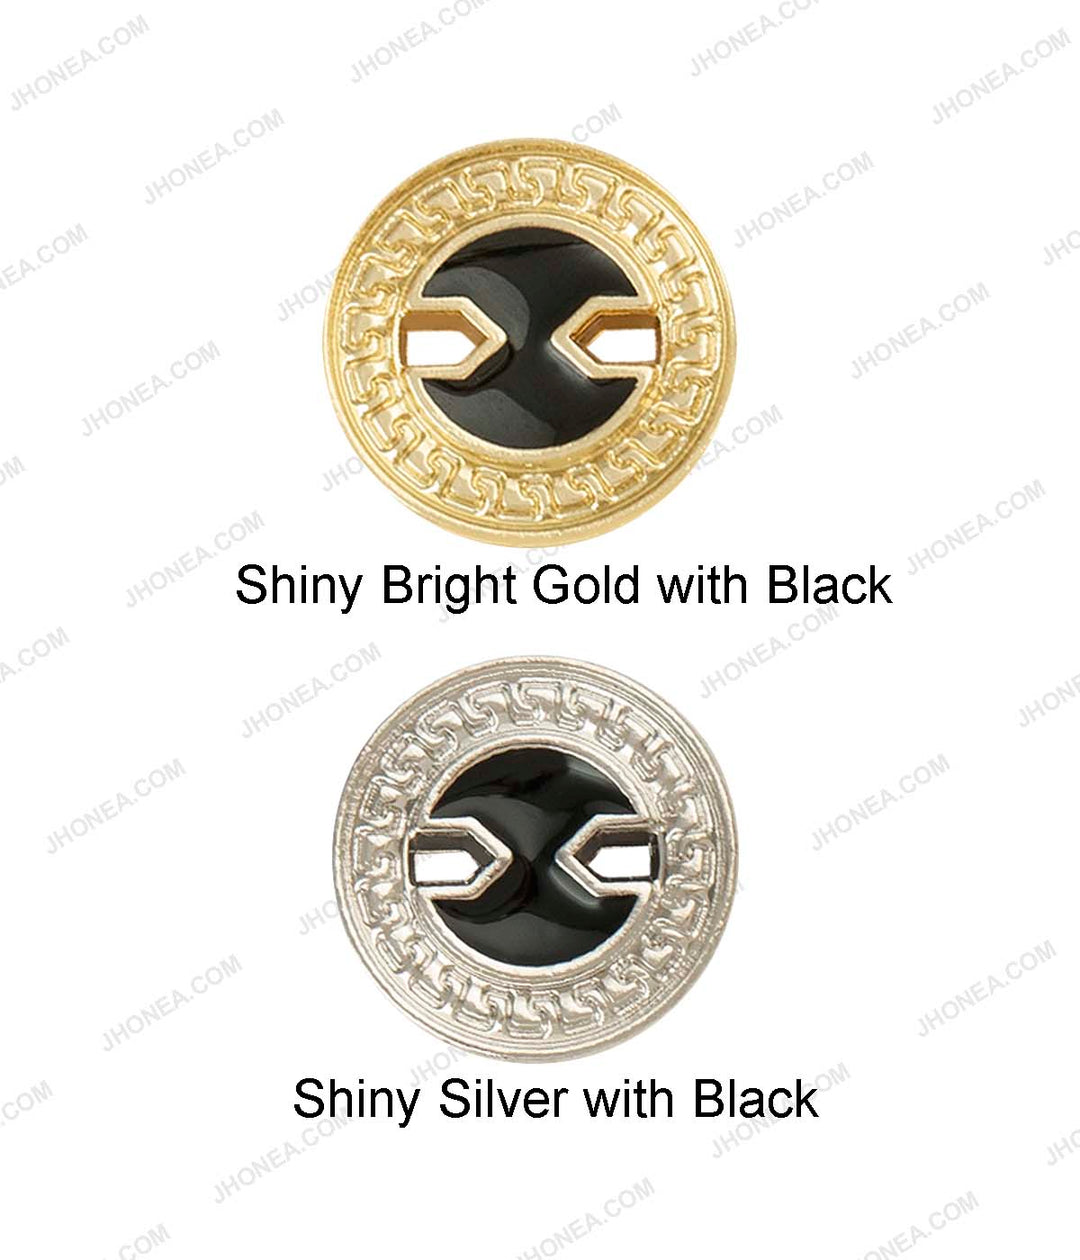 Shiny Gold & Shiny Silver Cutwork Enamel Royal Regal Buttons